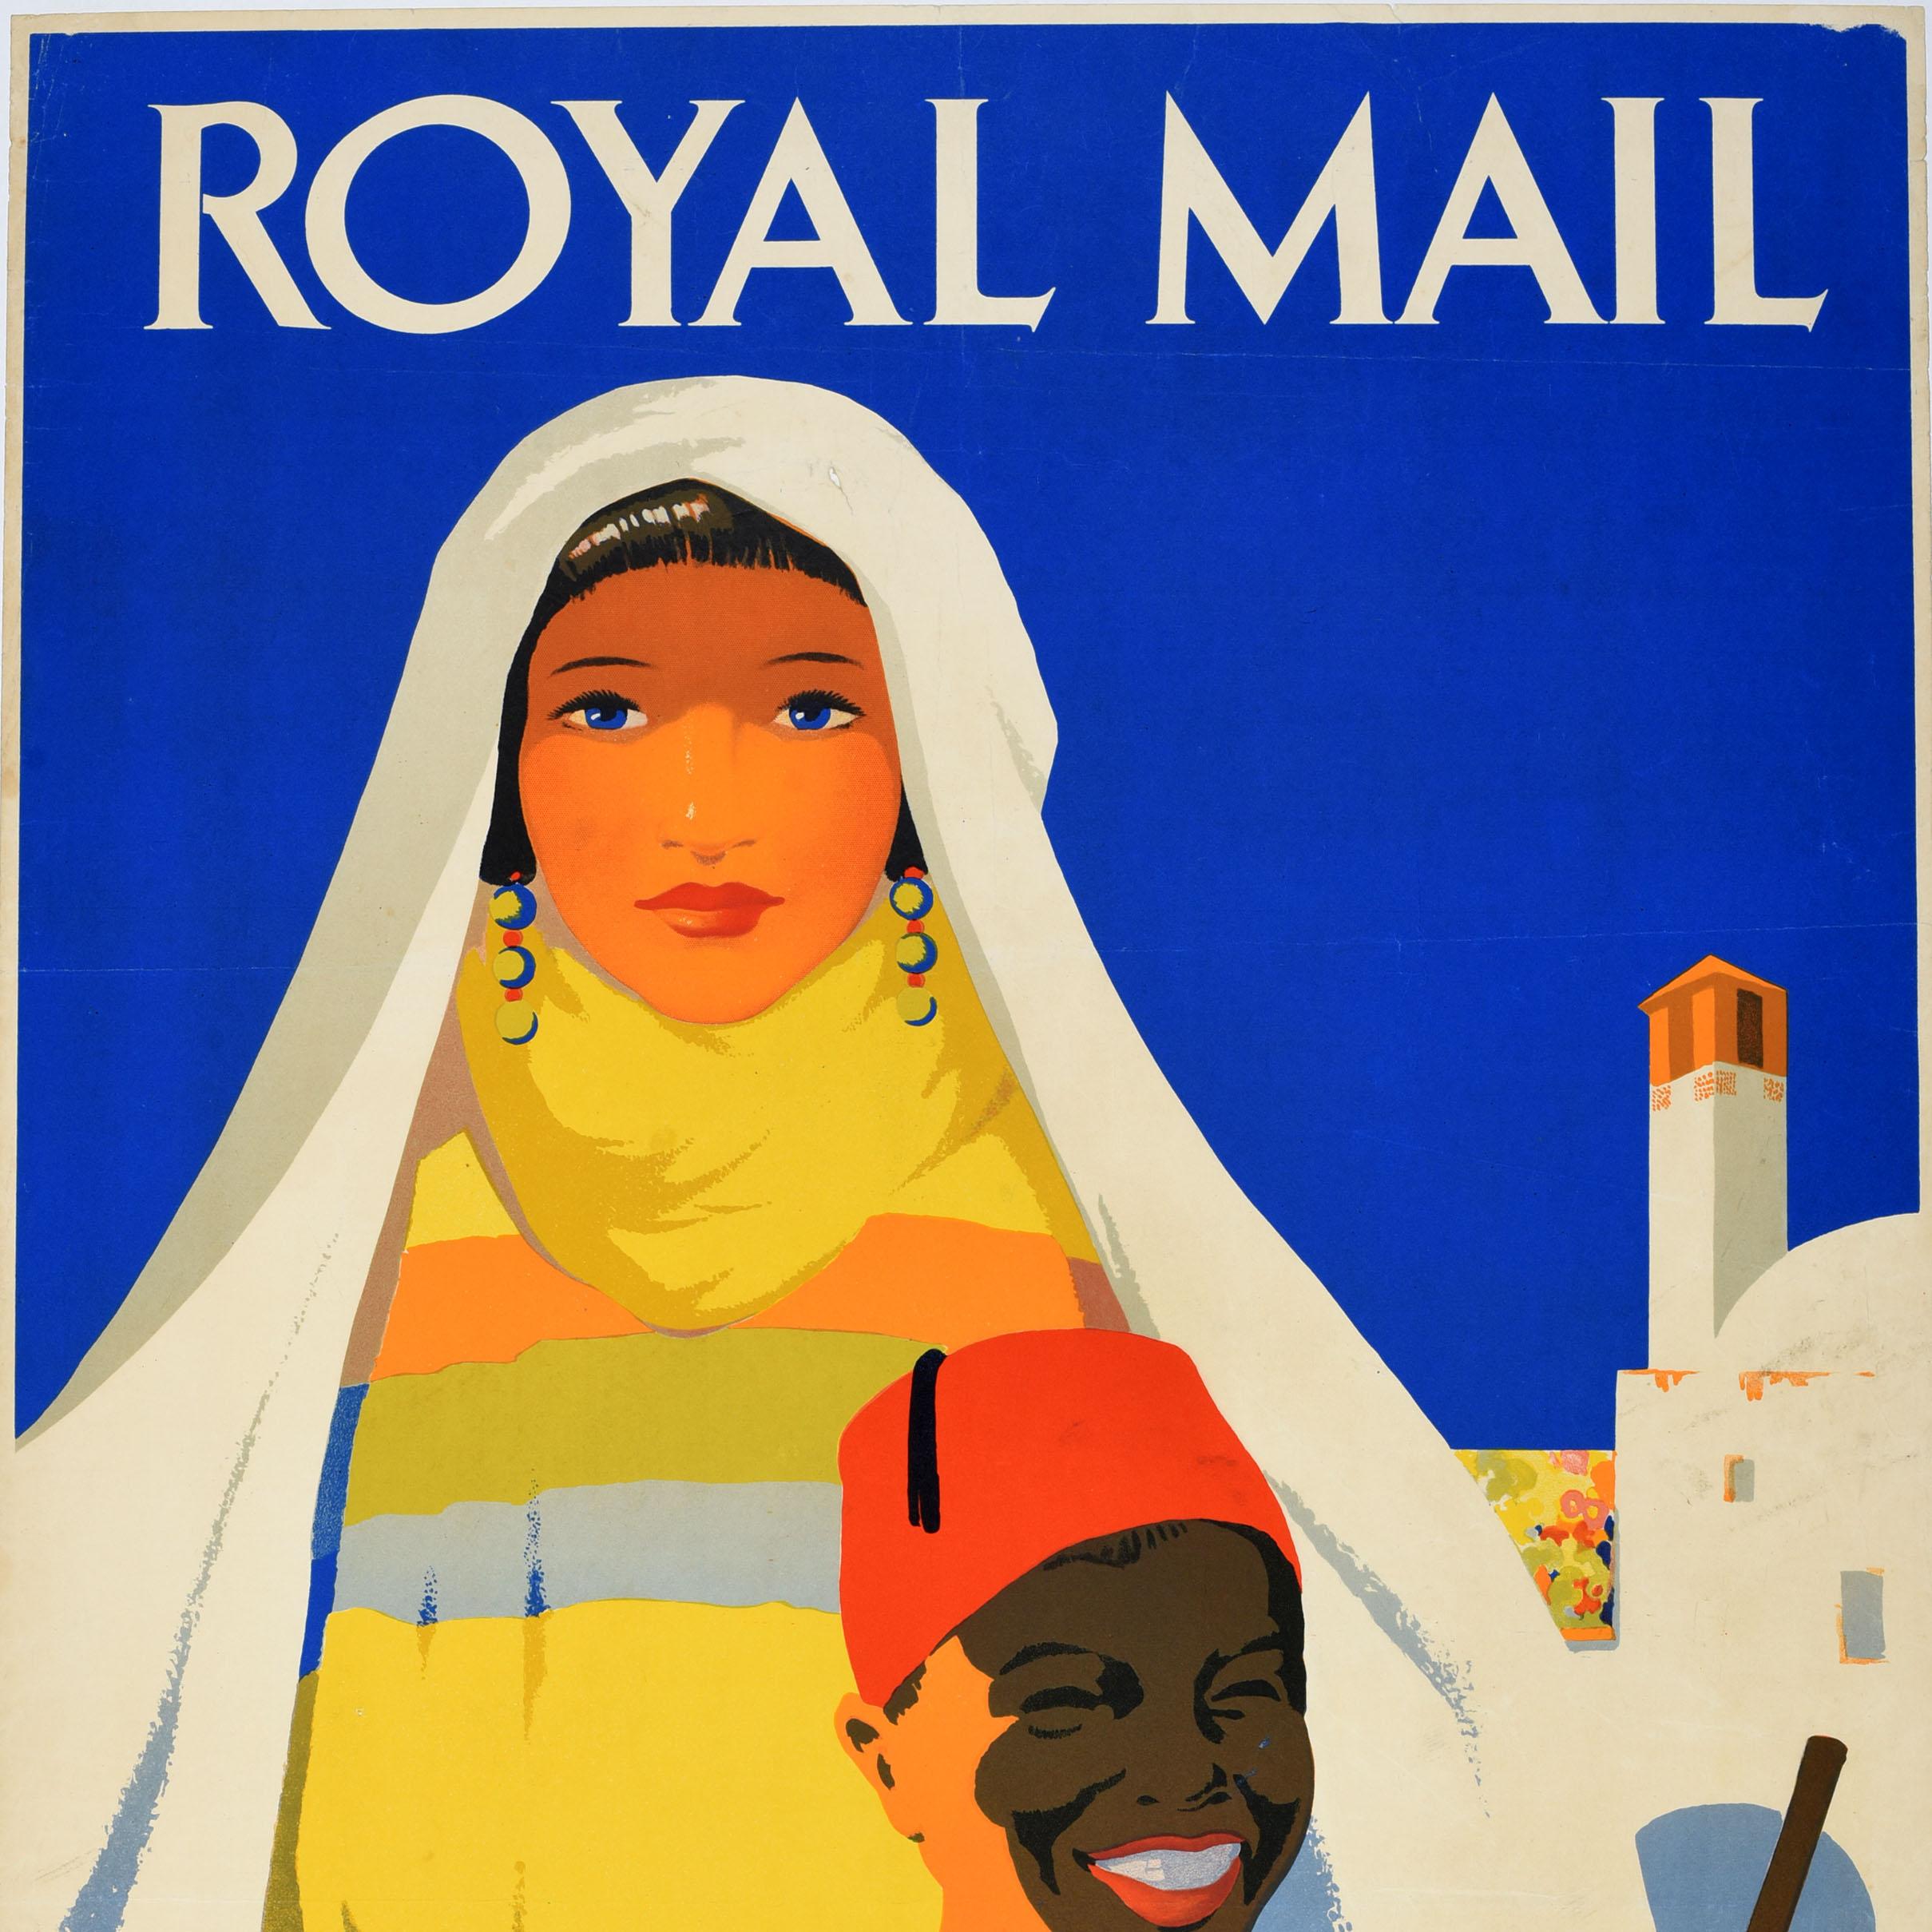 Original Vintage Travel Poster Sunshine Cruises Atlantis Royal Mail Steam Ship - Beige Print by Percy Padden